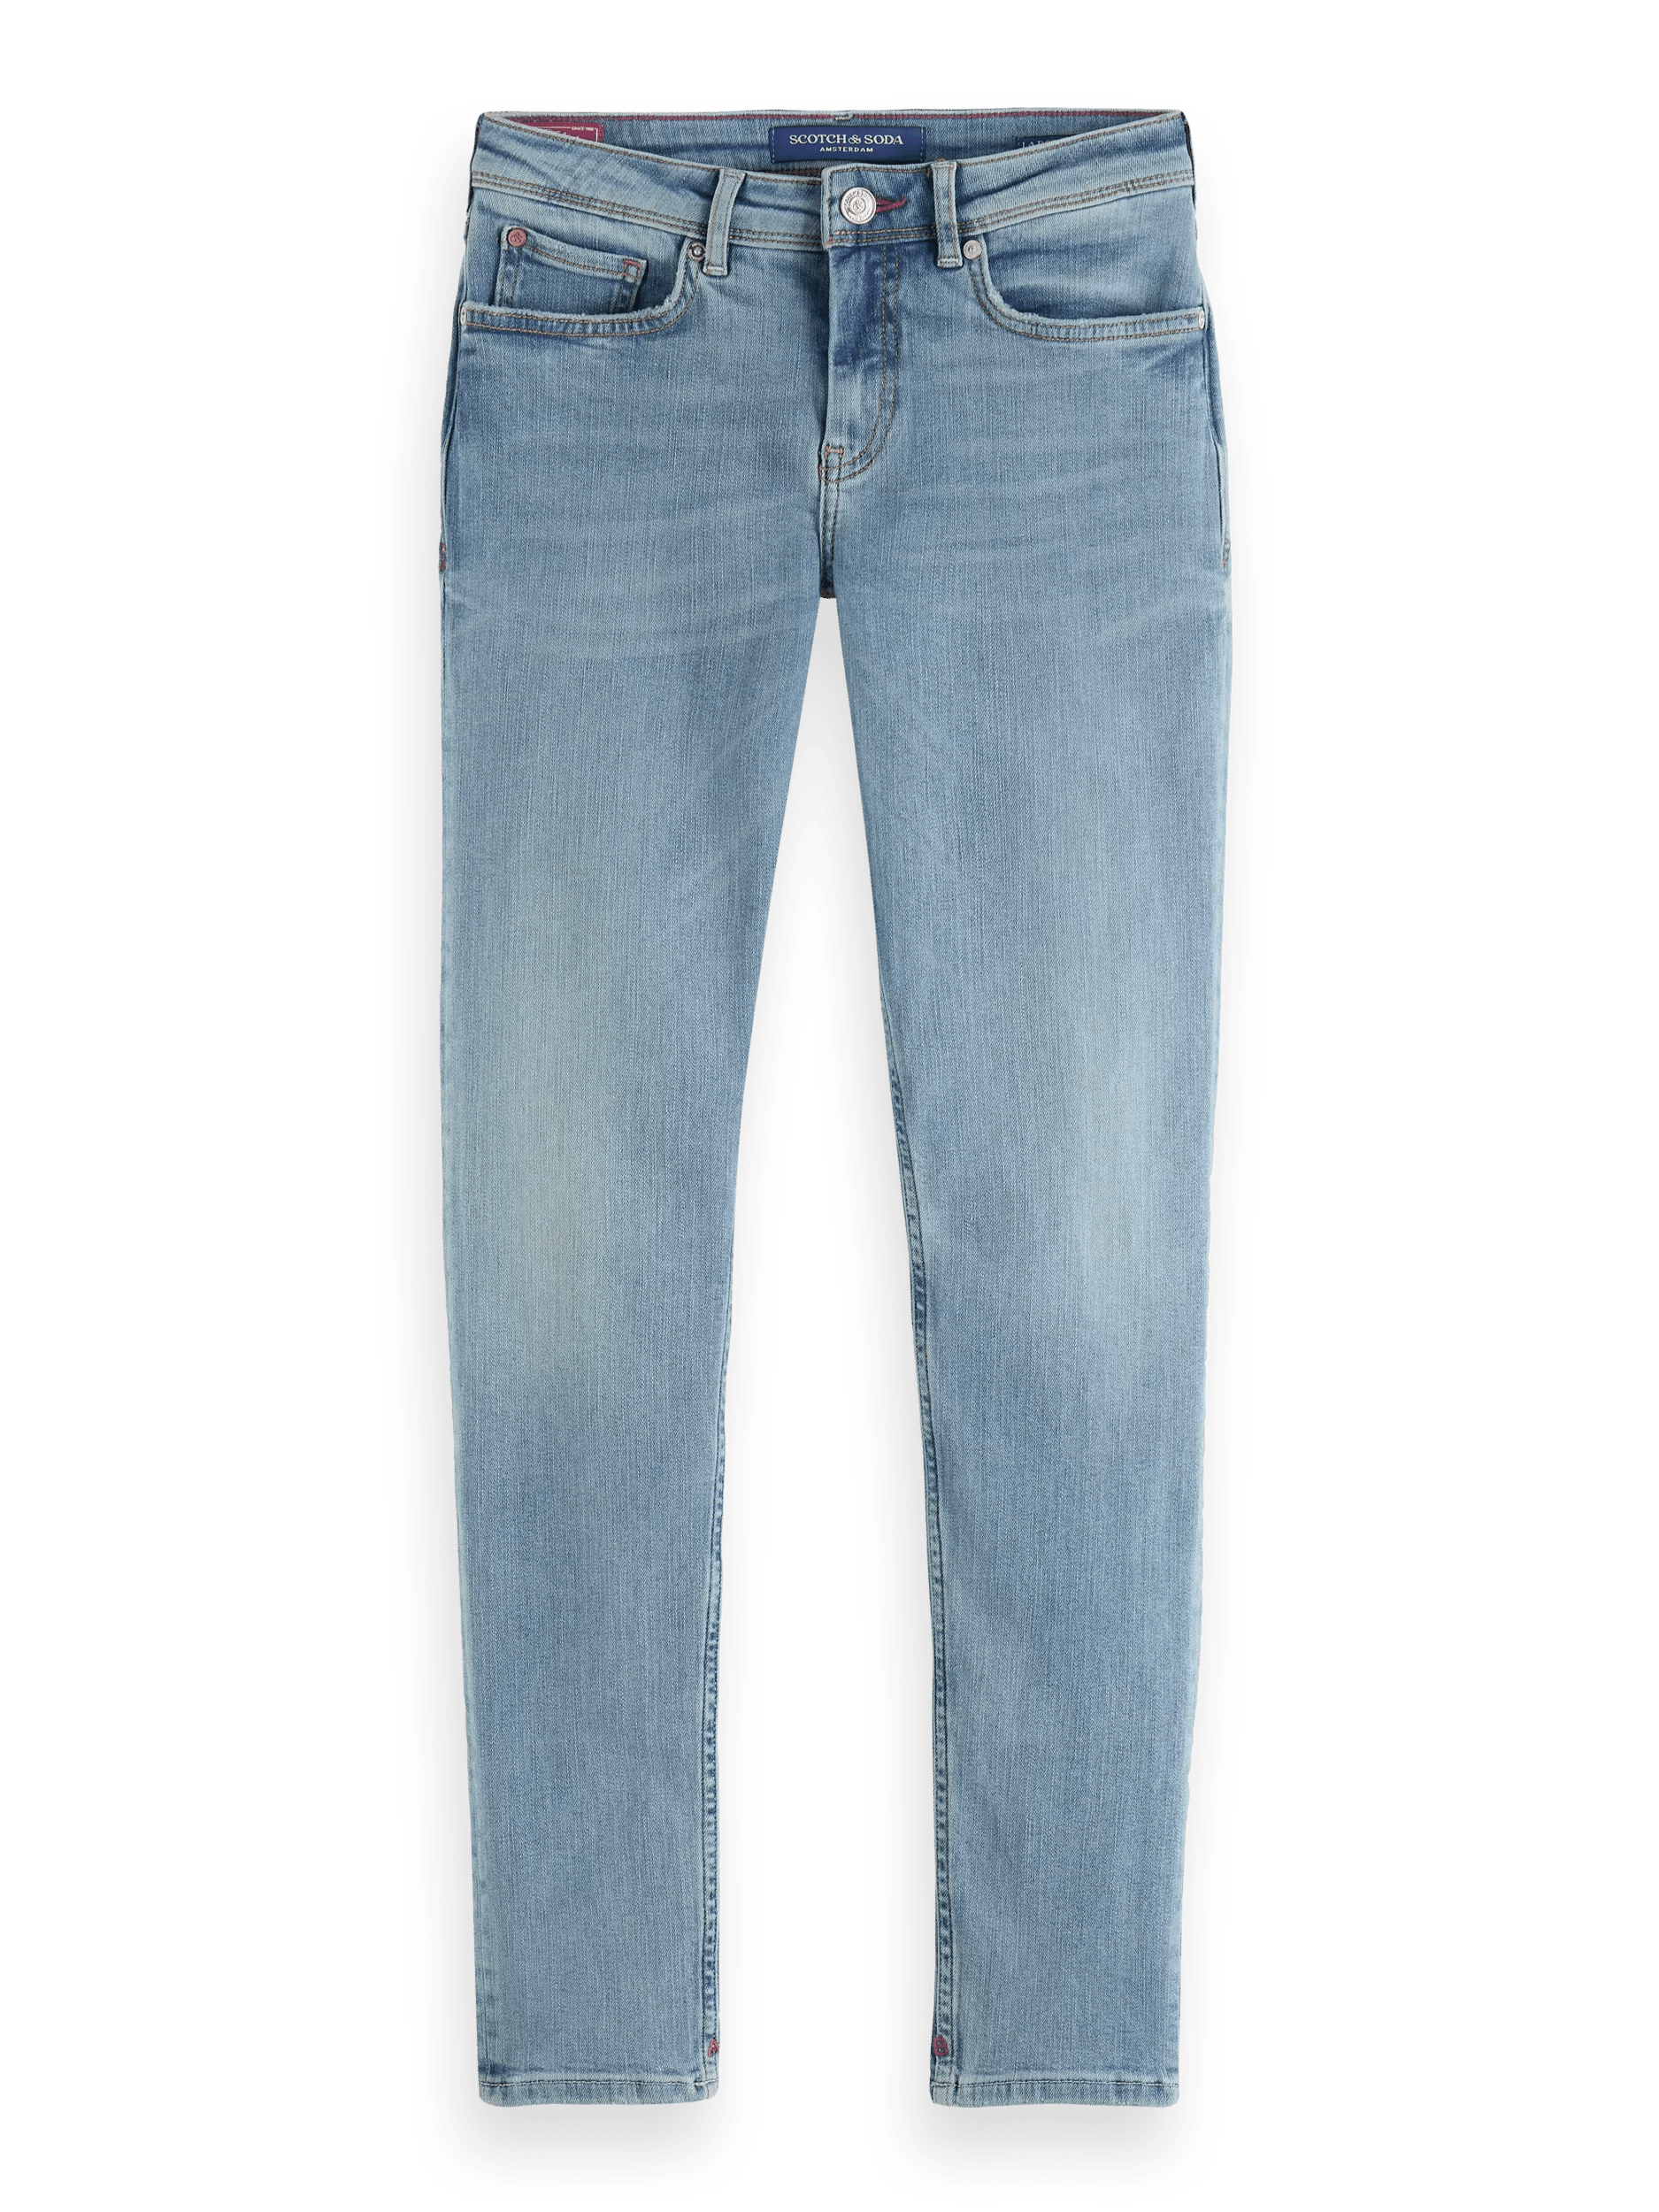 Scotch & Soda La Bohemienne mid-rise skinny fit jeans FNT